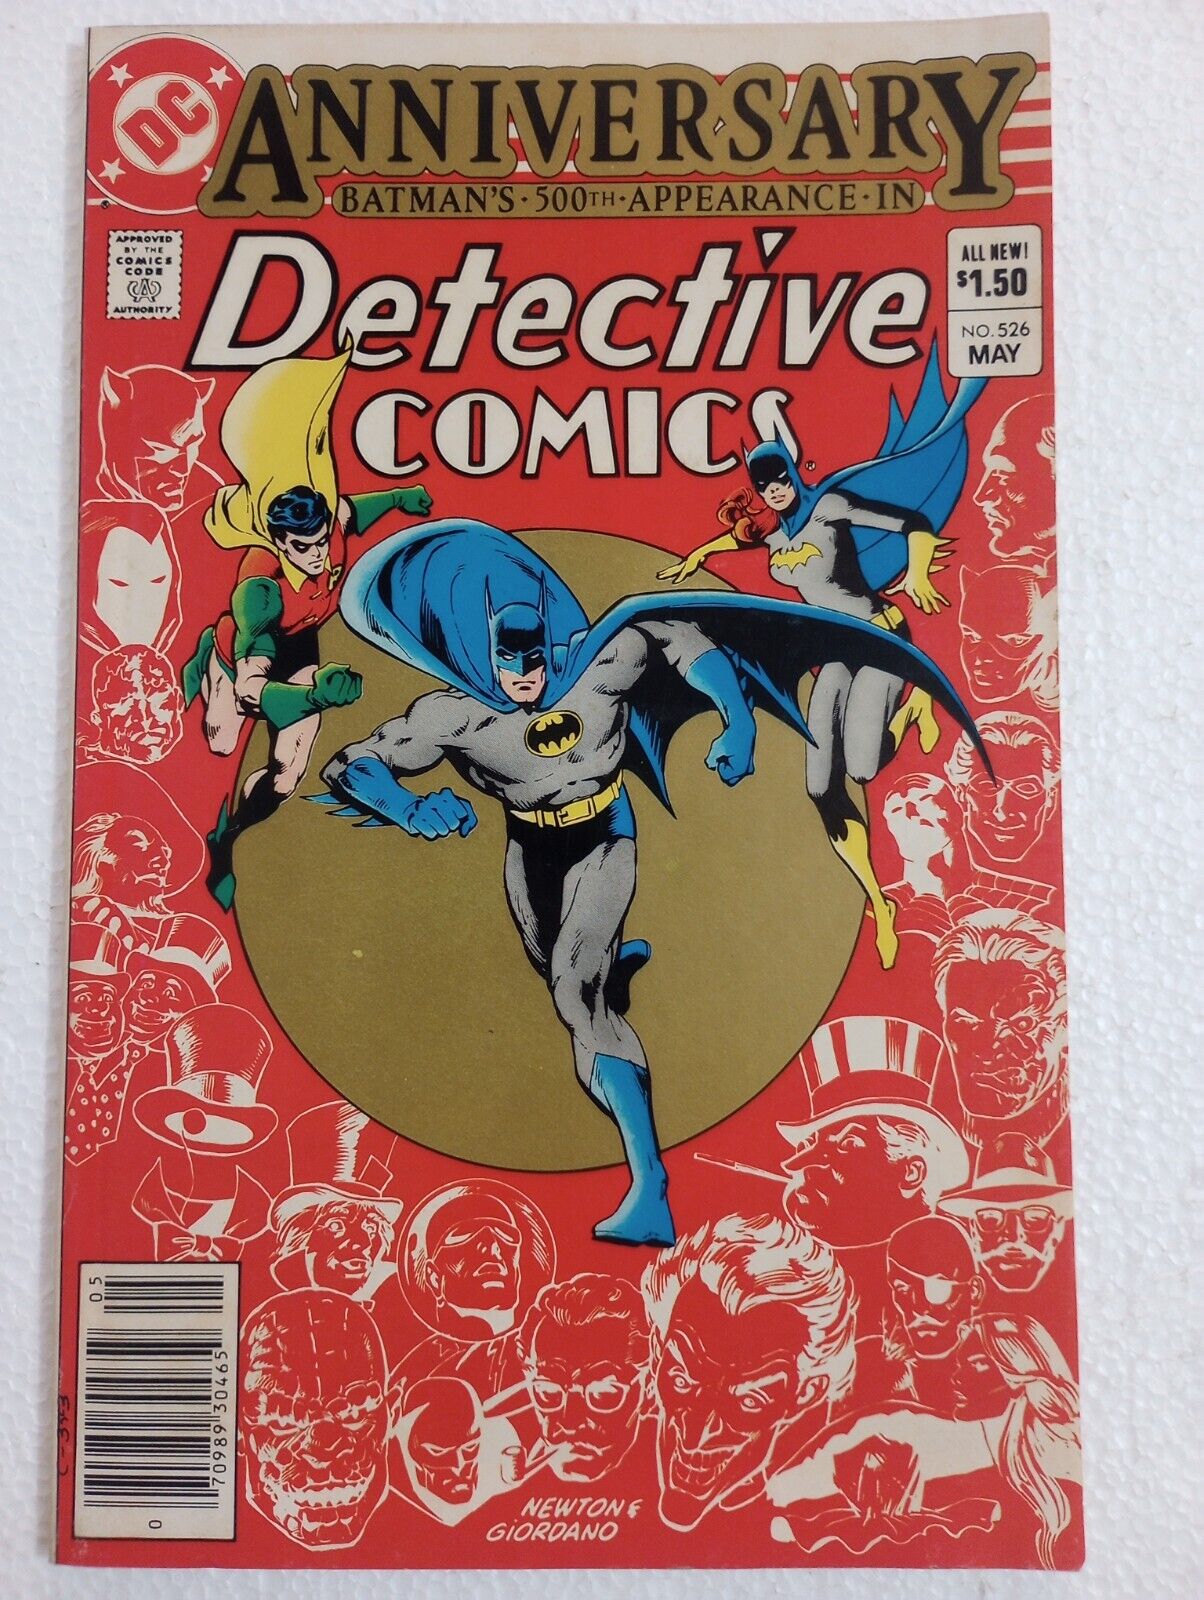 Detective Comics 526, 1983, Anniversary Issue, Batman's 500th Appearance